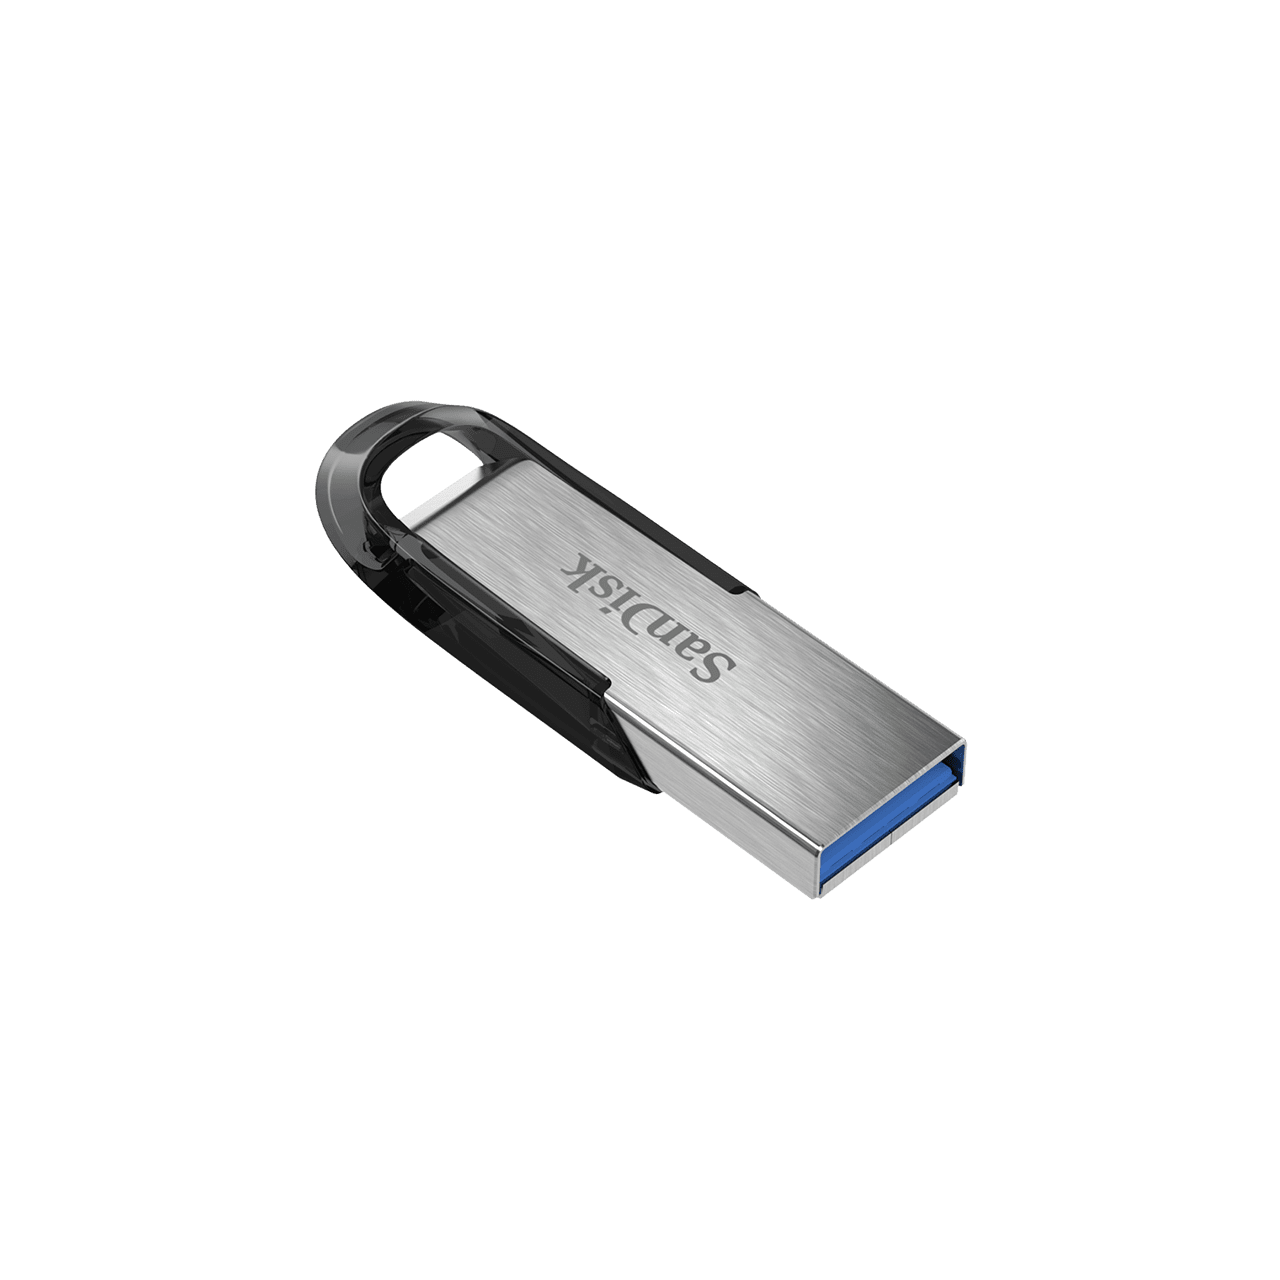 SanDisk 512 GB CZ73 USB 3.0 Metal Mobile Disk Drive | SDCZ73-512G-G46